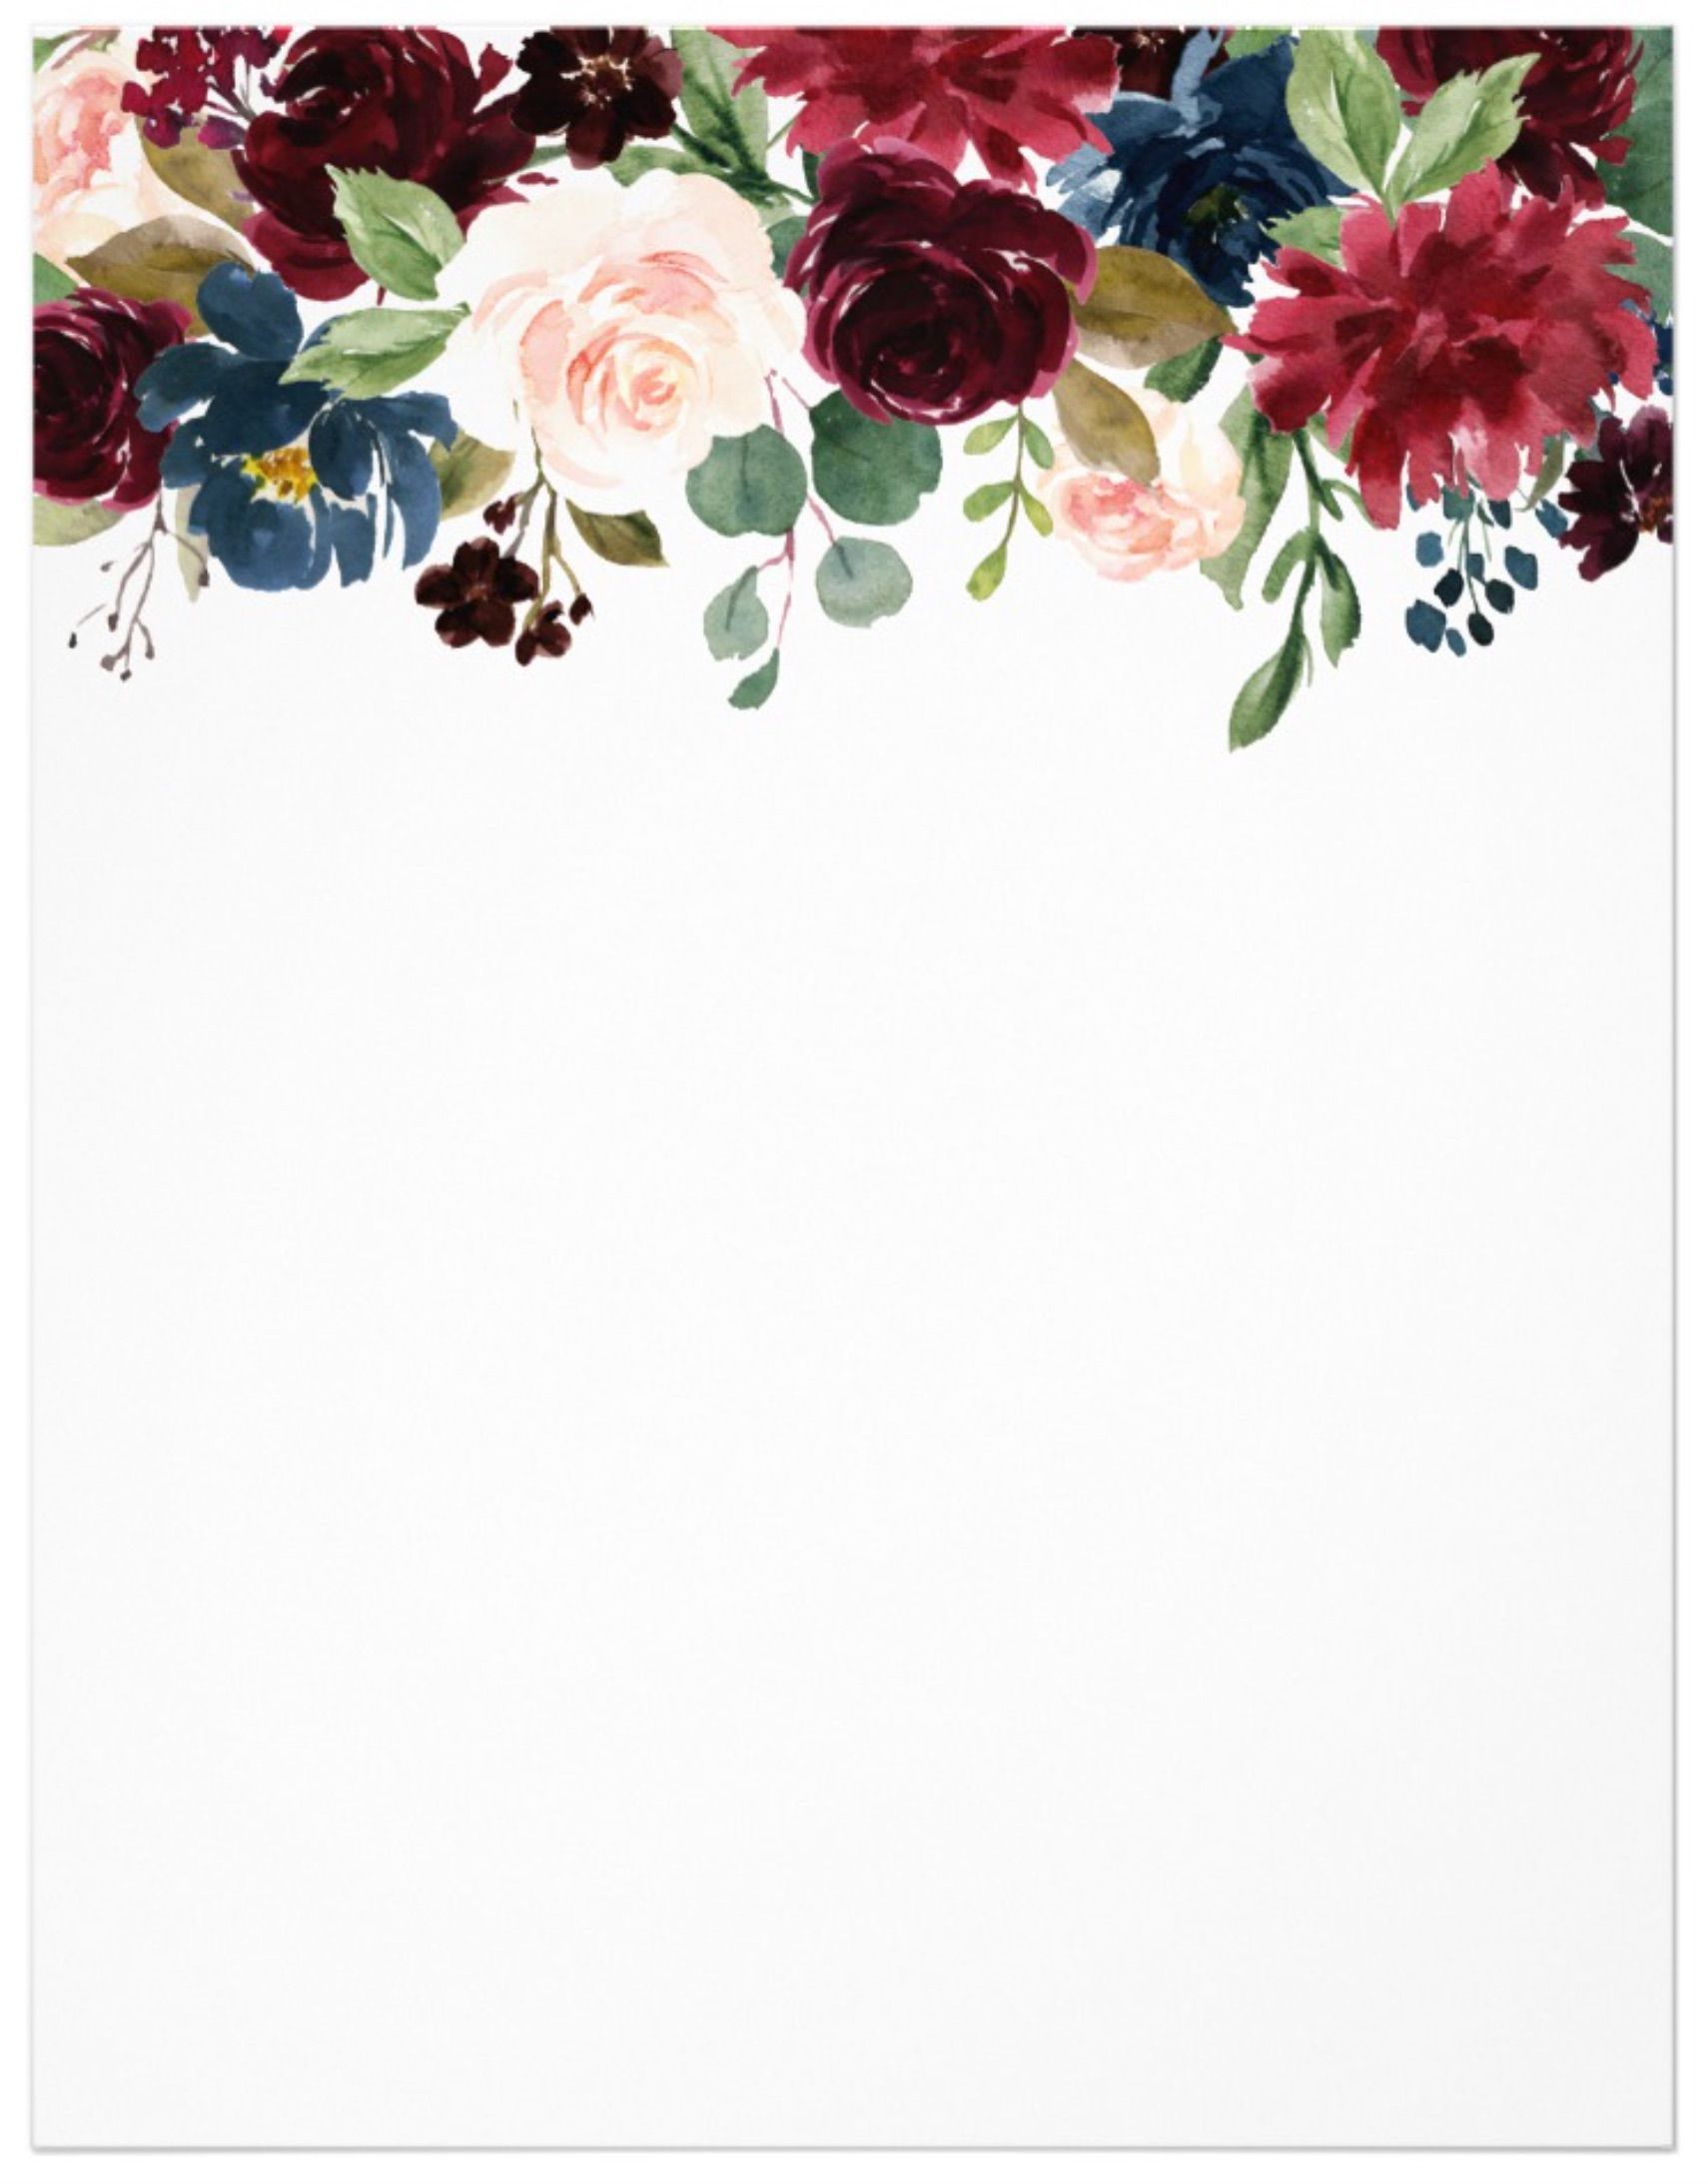 Flower Border Wallpapers - Wallpaper Cave